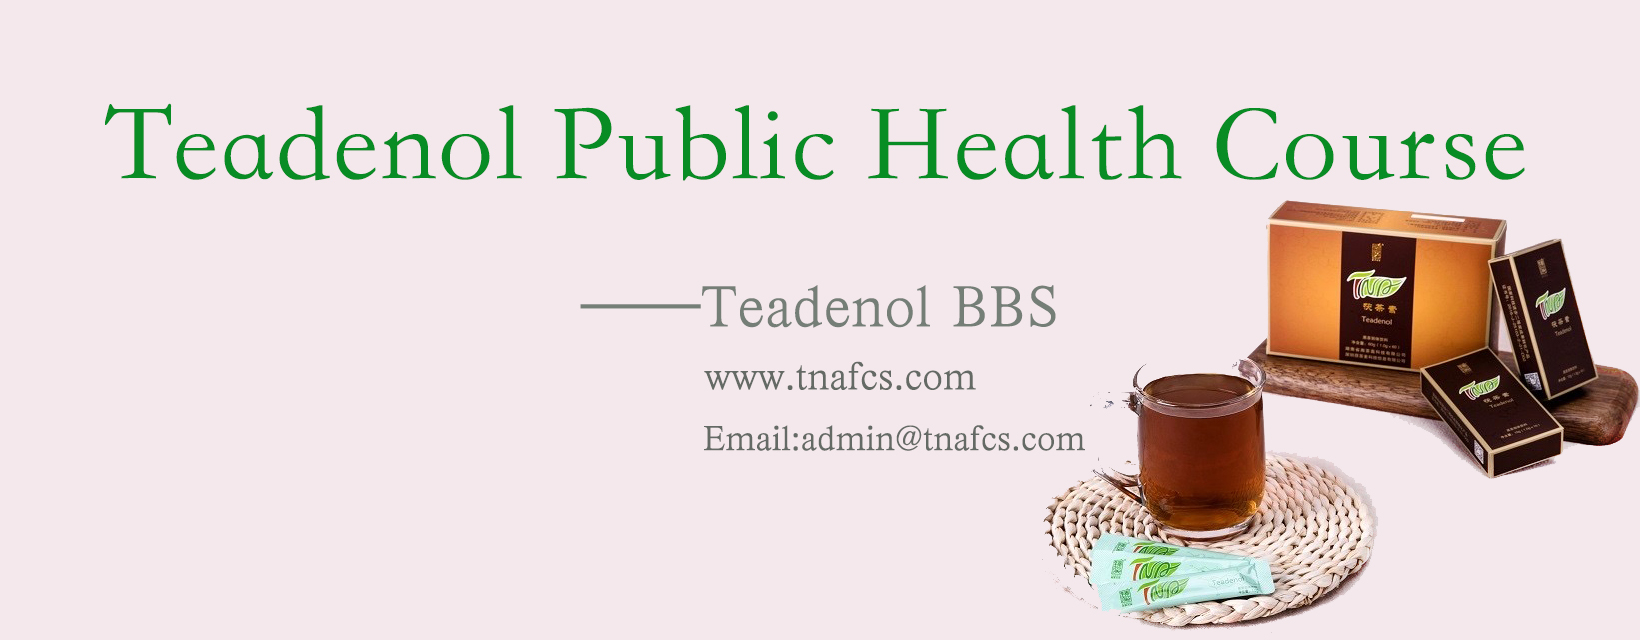 Teadenol-Public-Health-Course.jpg